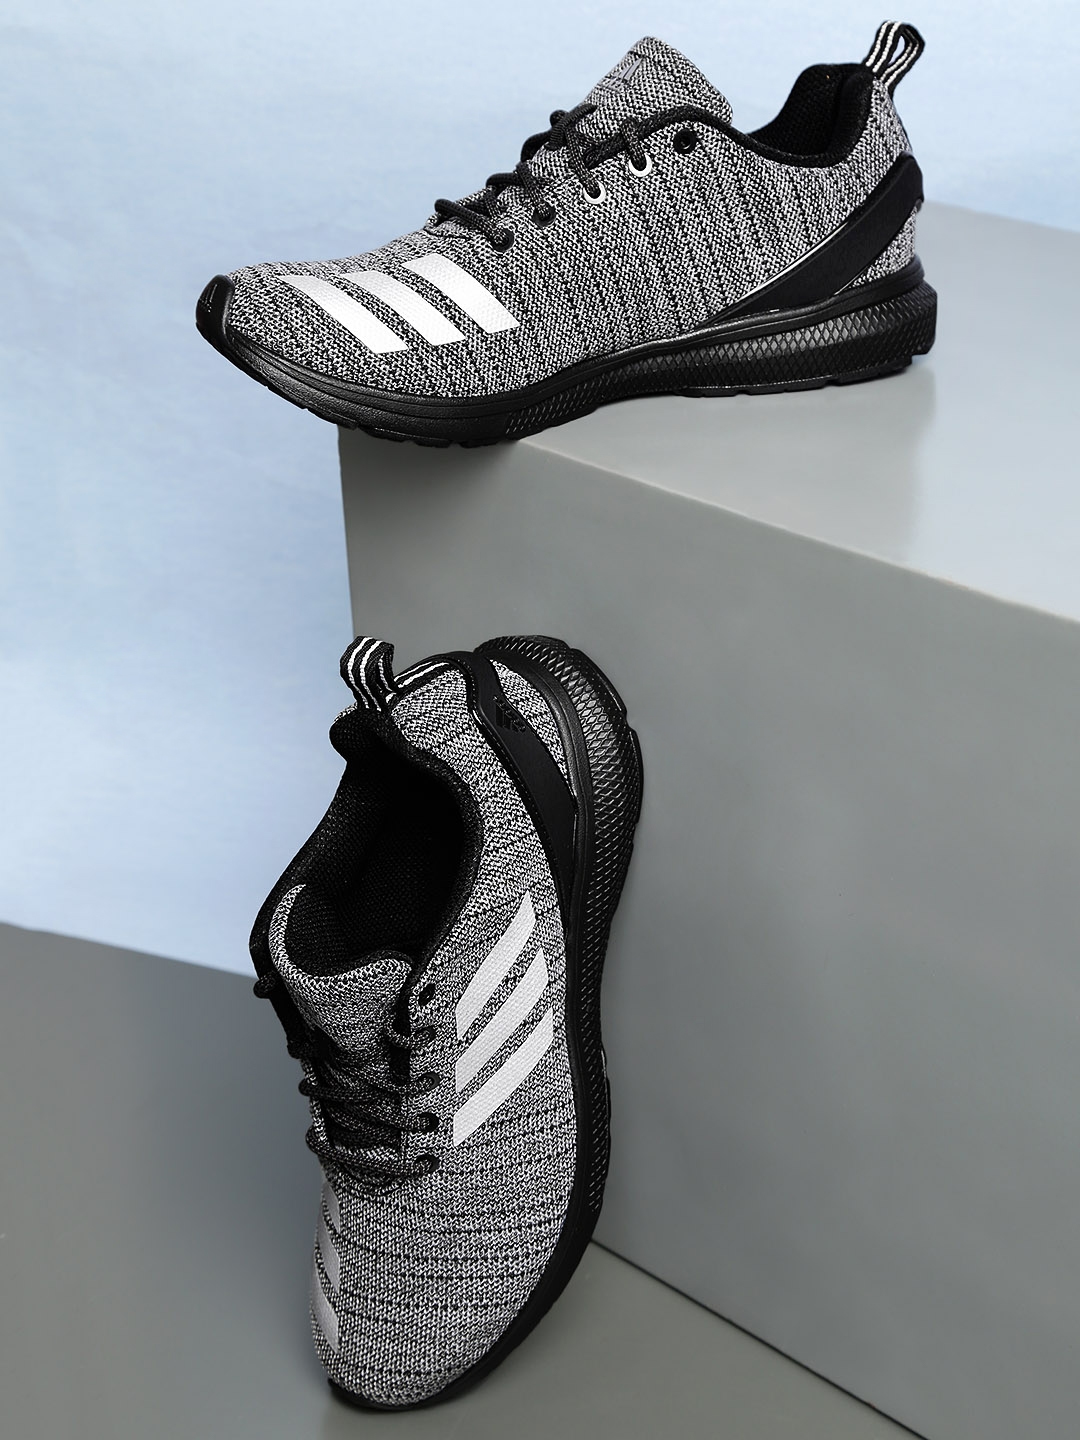 adidas men's legus 1 m running shoes